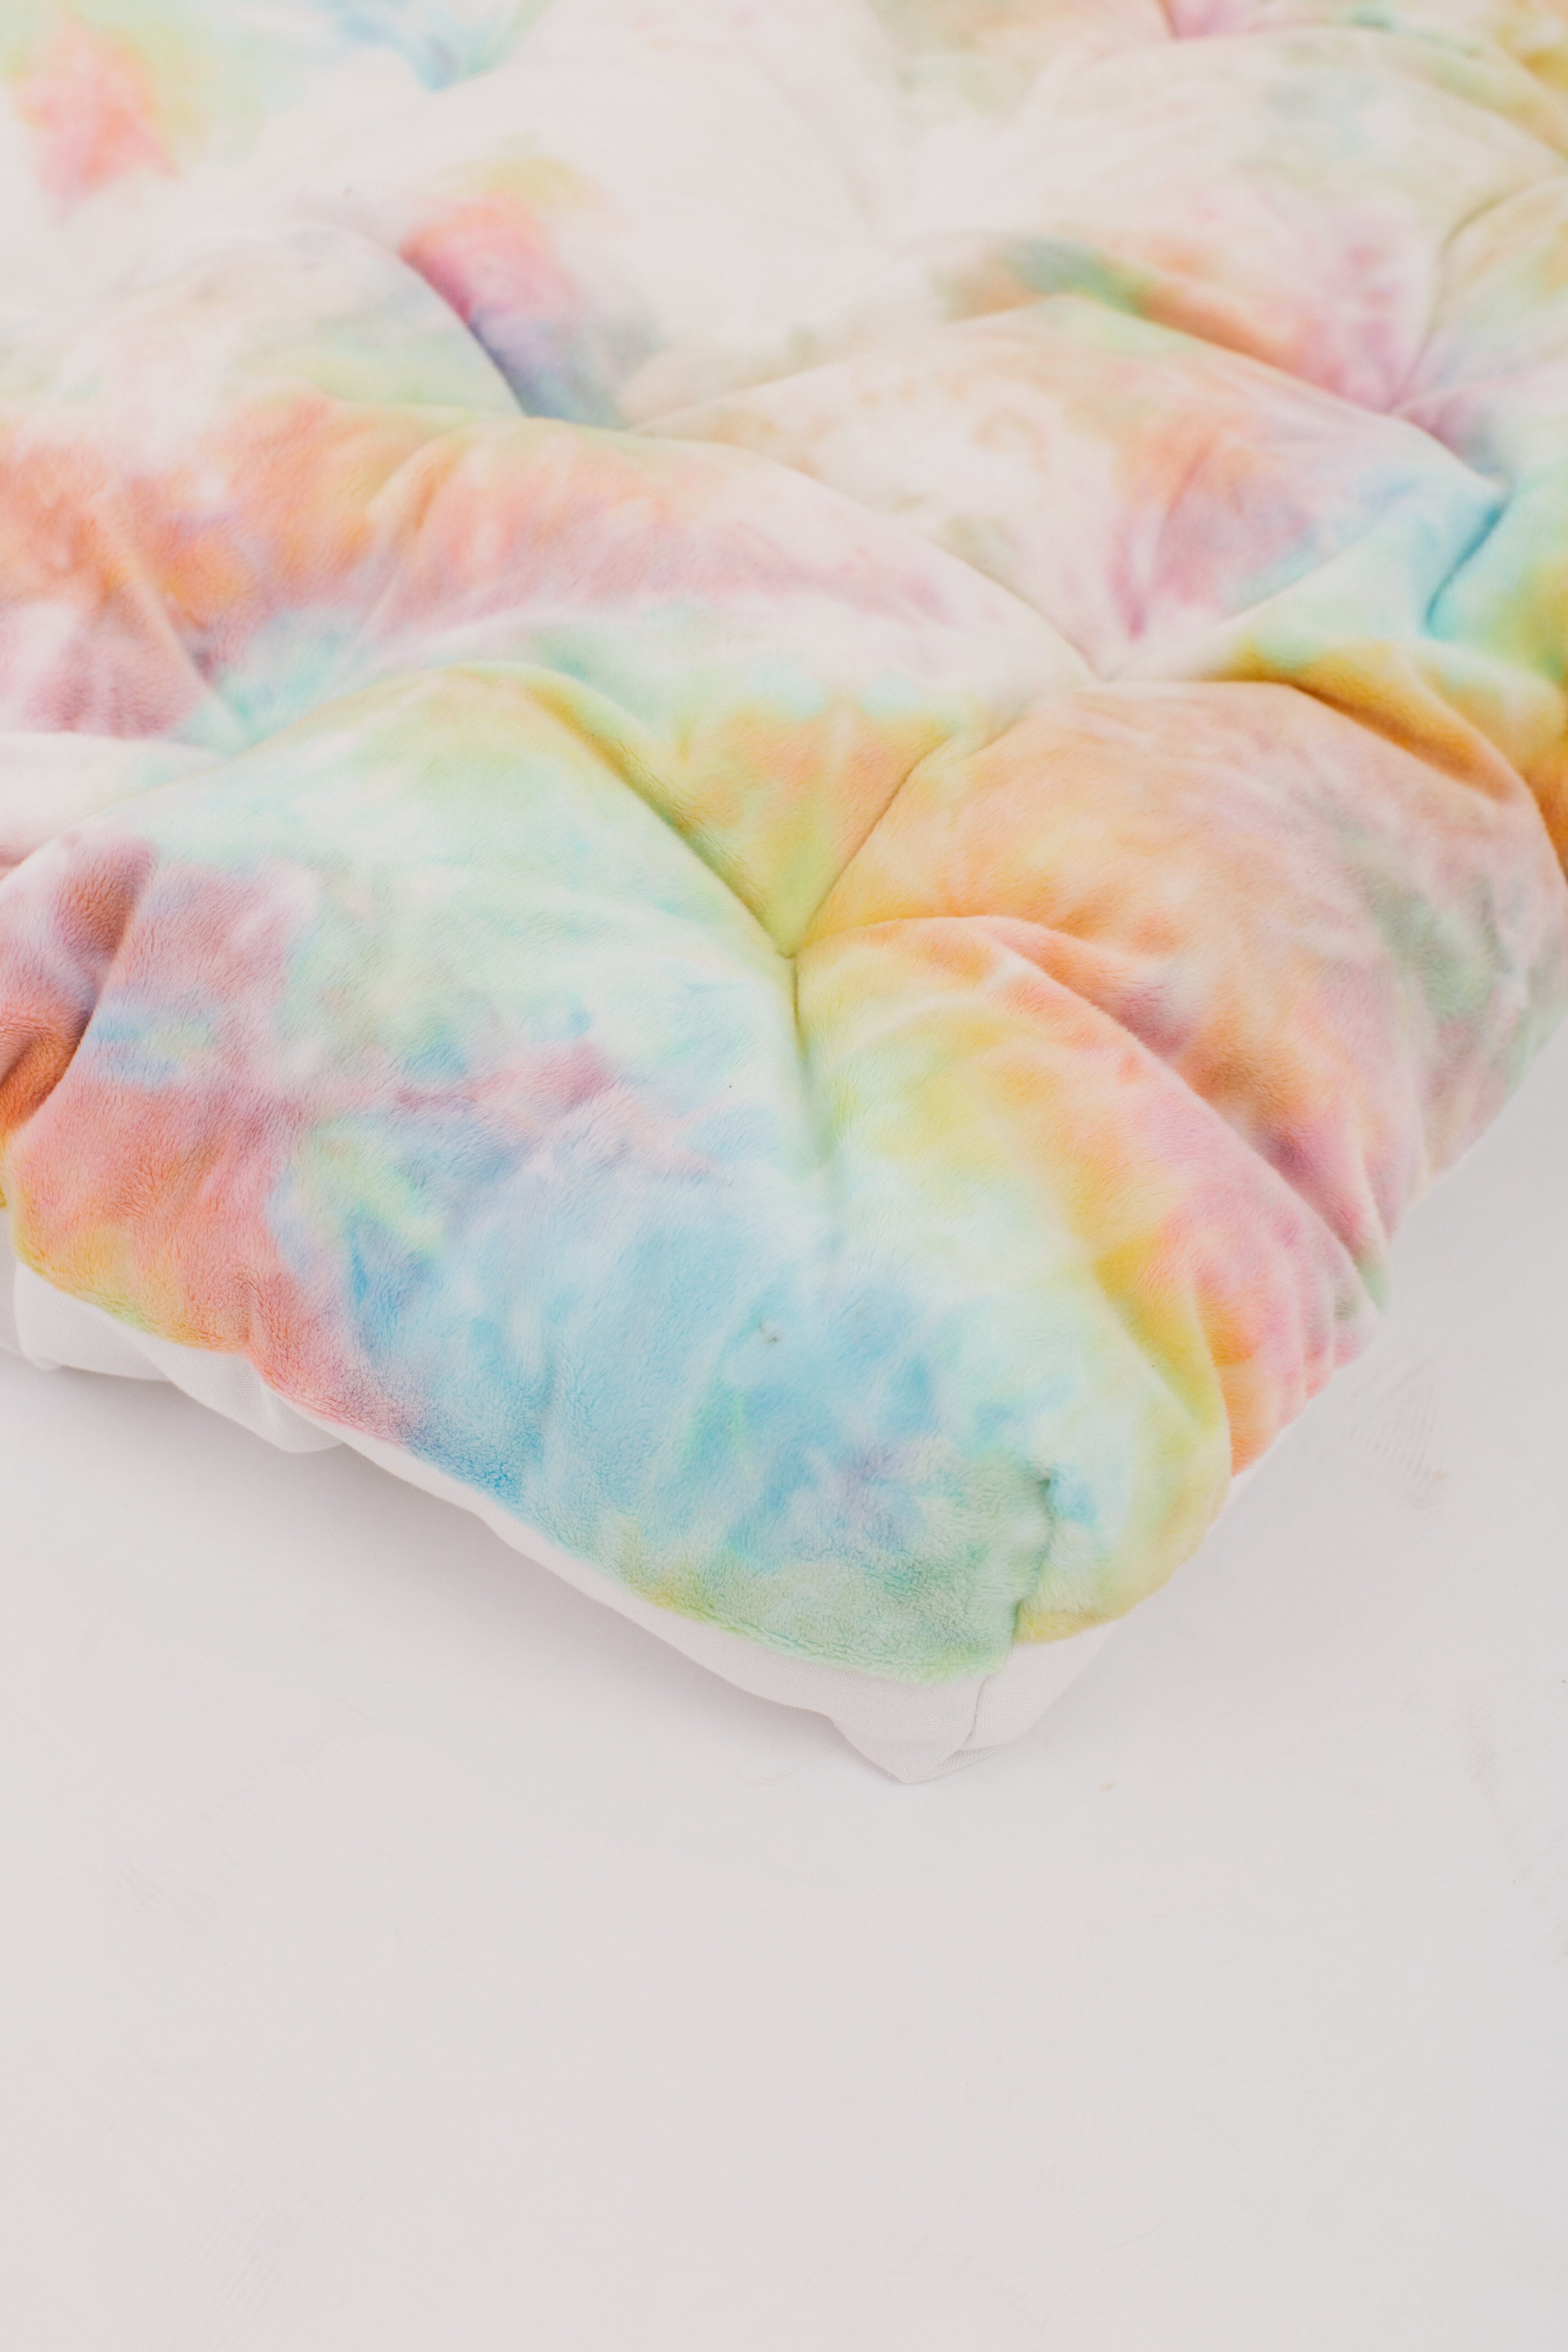 The Rainbow Tie-Dye Cuddle Play Mattress